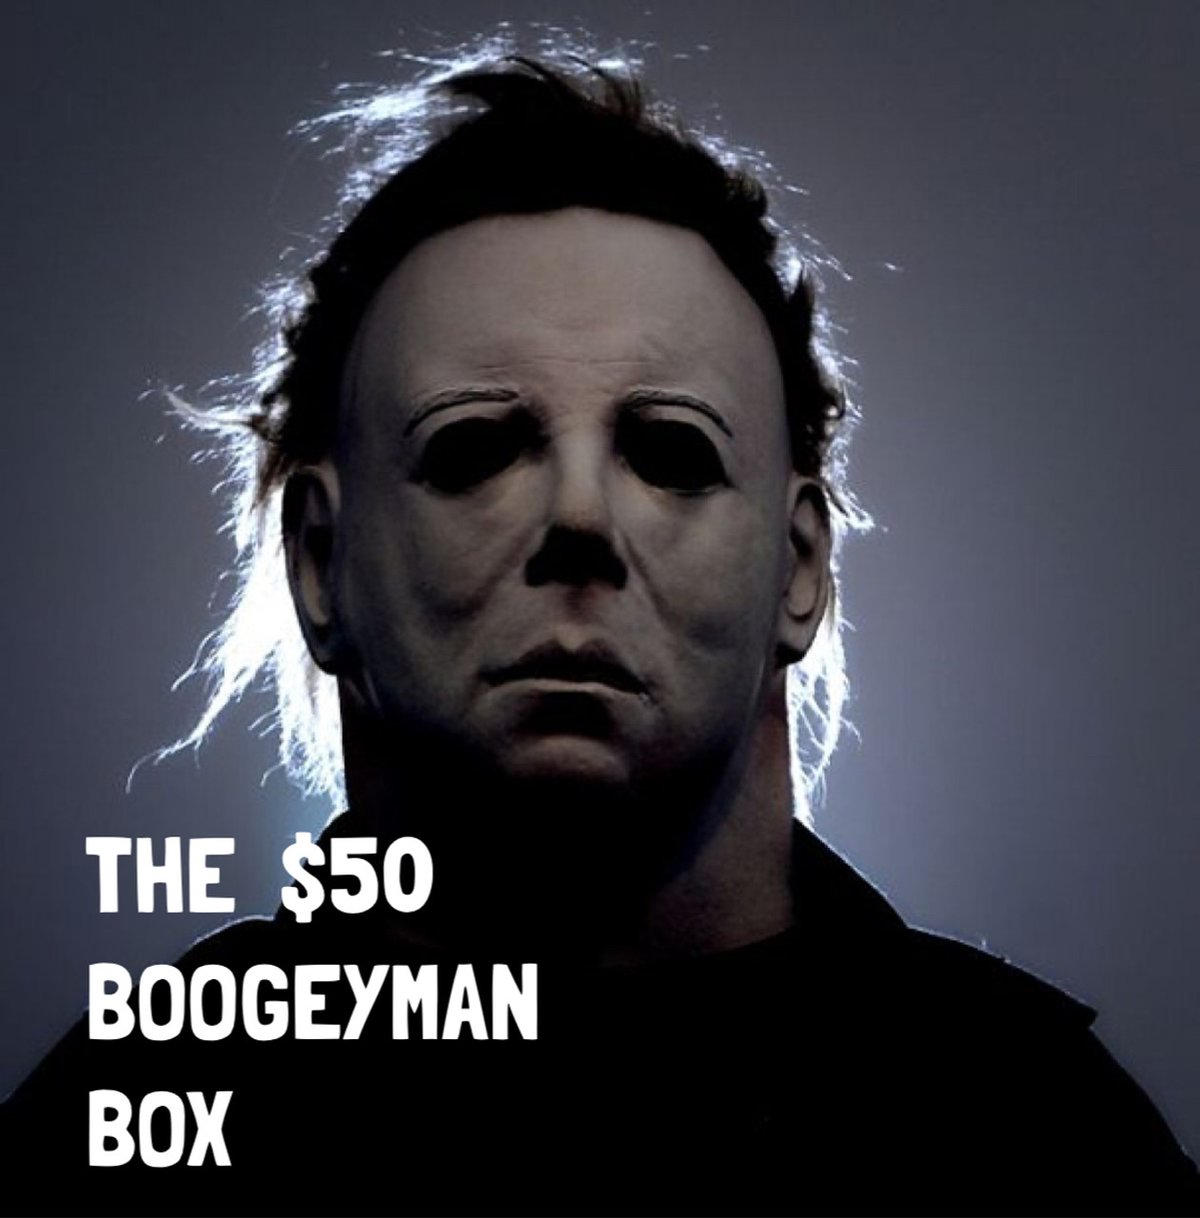 Image of The $50 BOOGEYMAN BOX